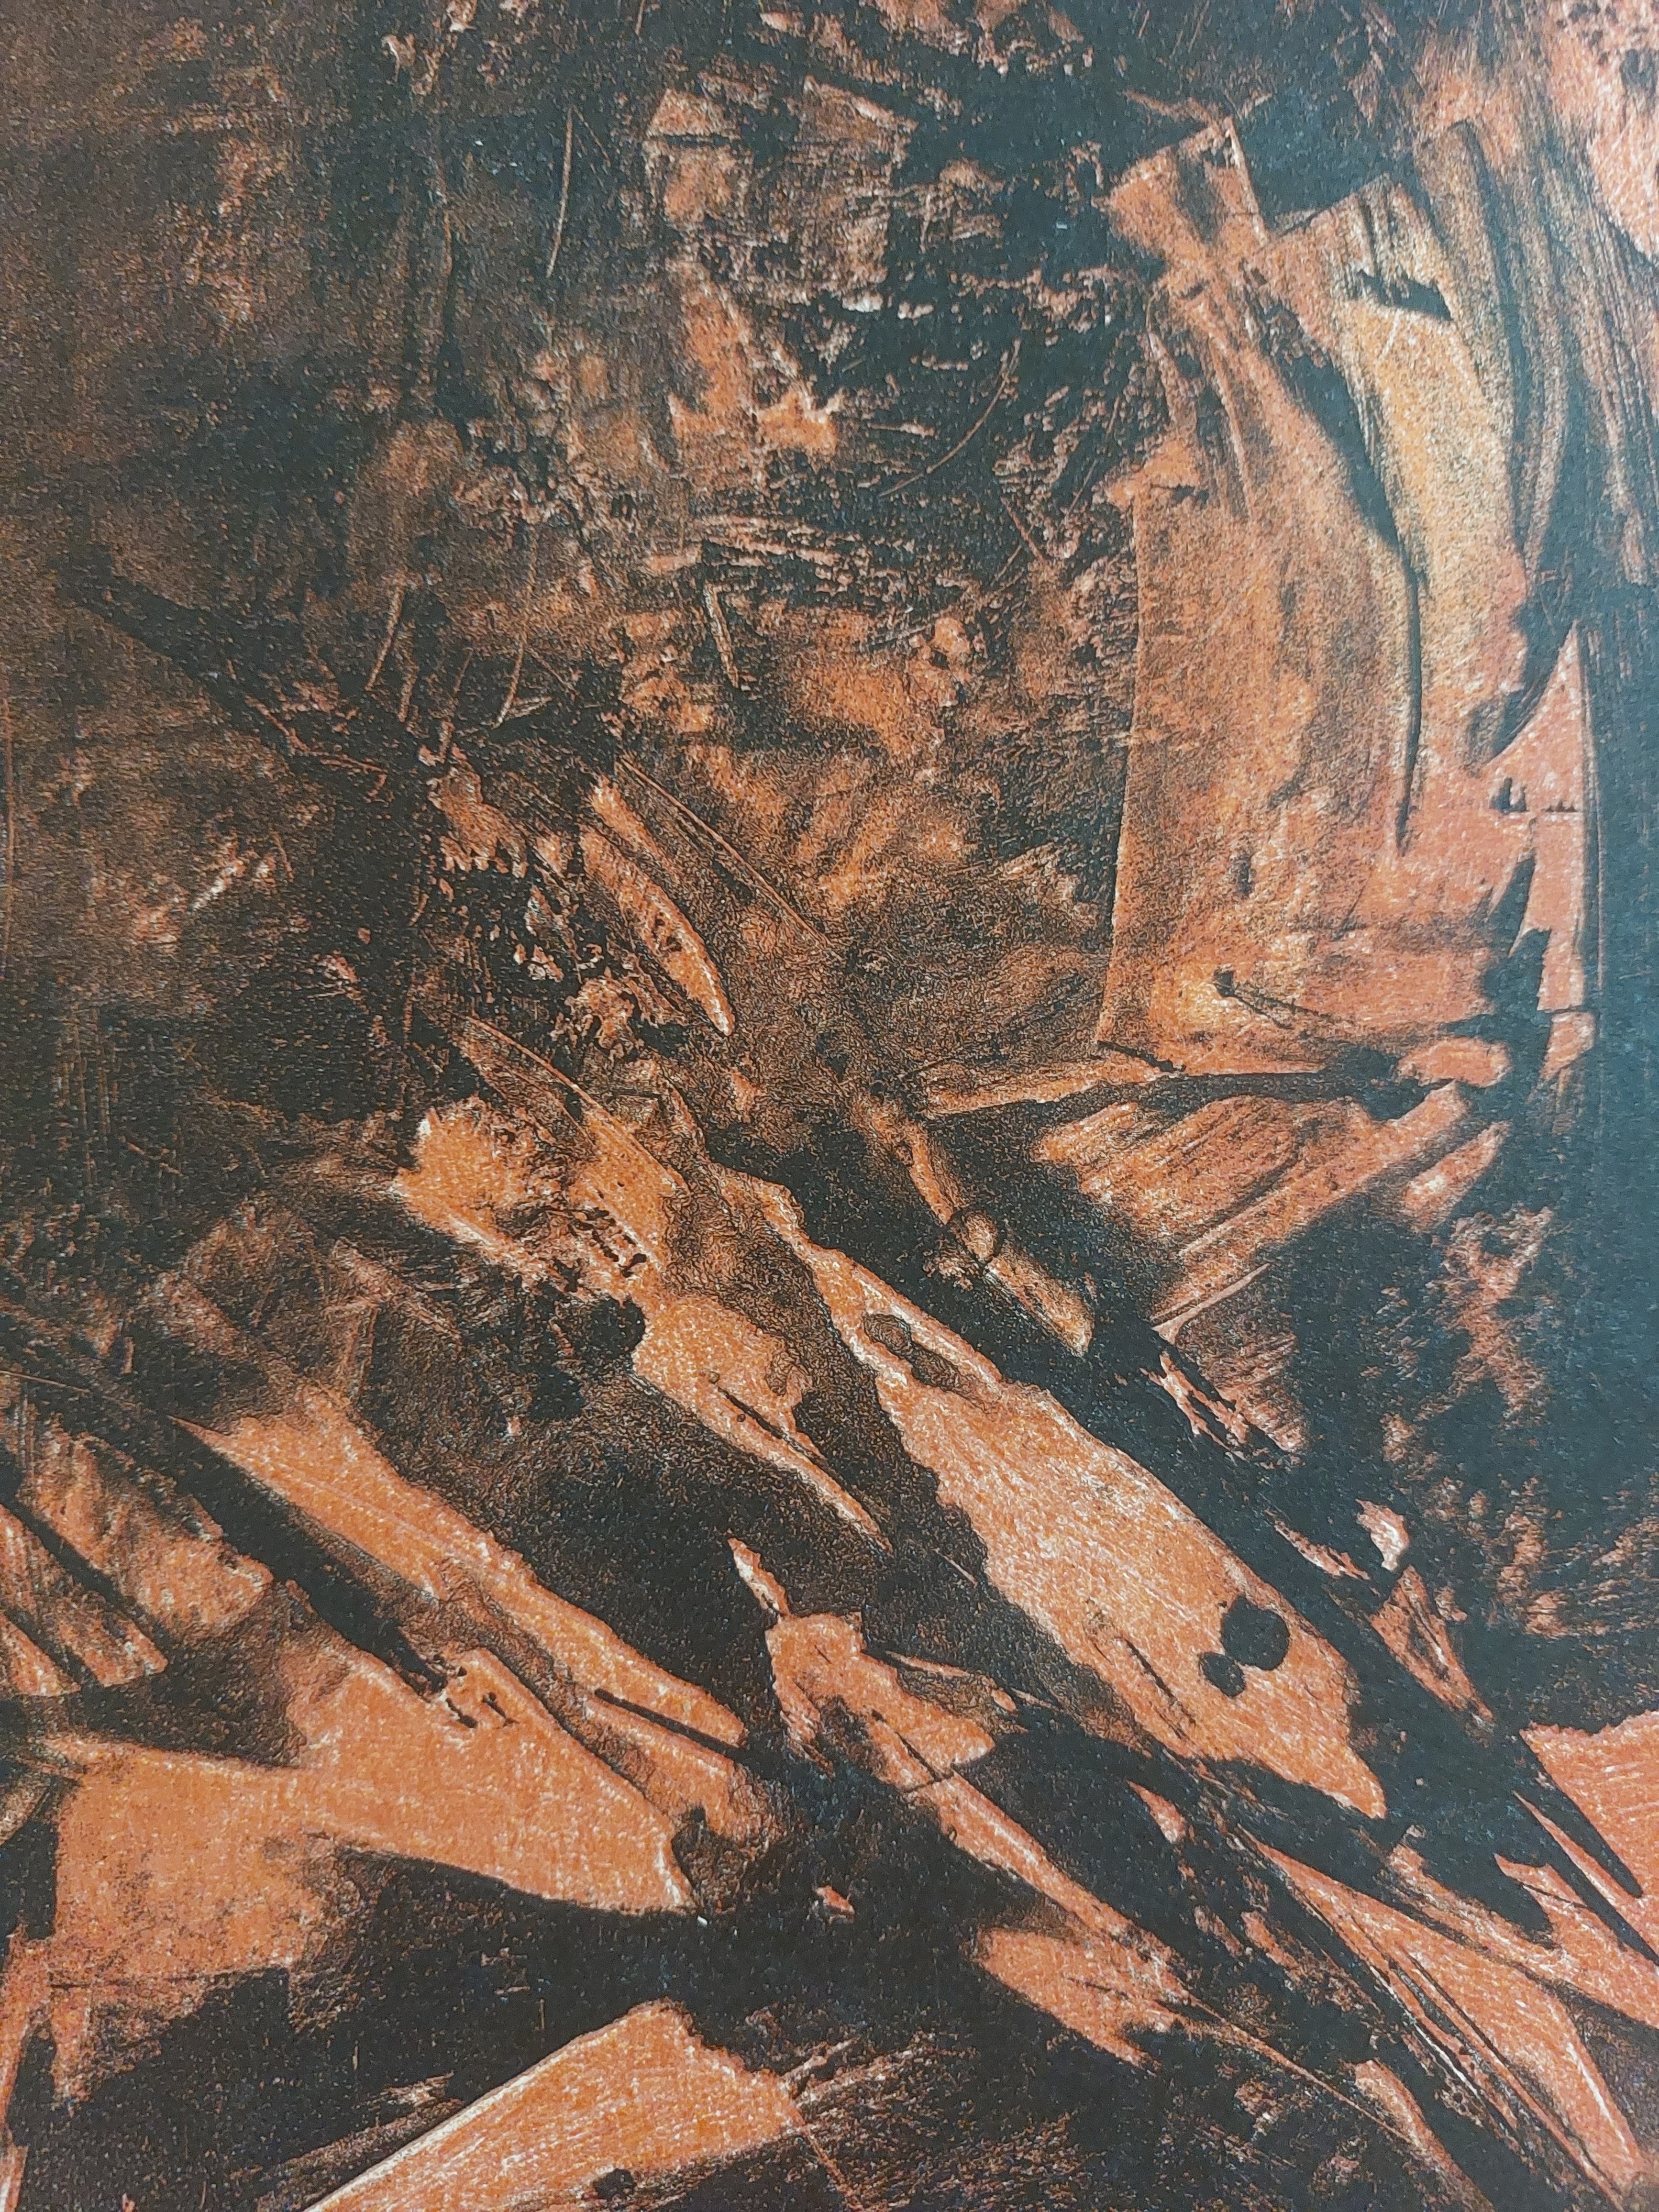 Manuel VIOLA. Casidas, 1969. Litografía original firmada